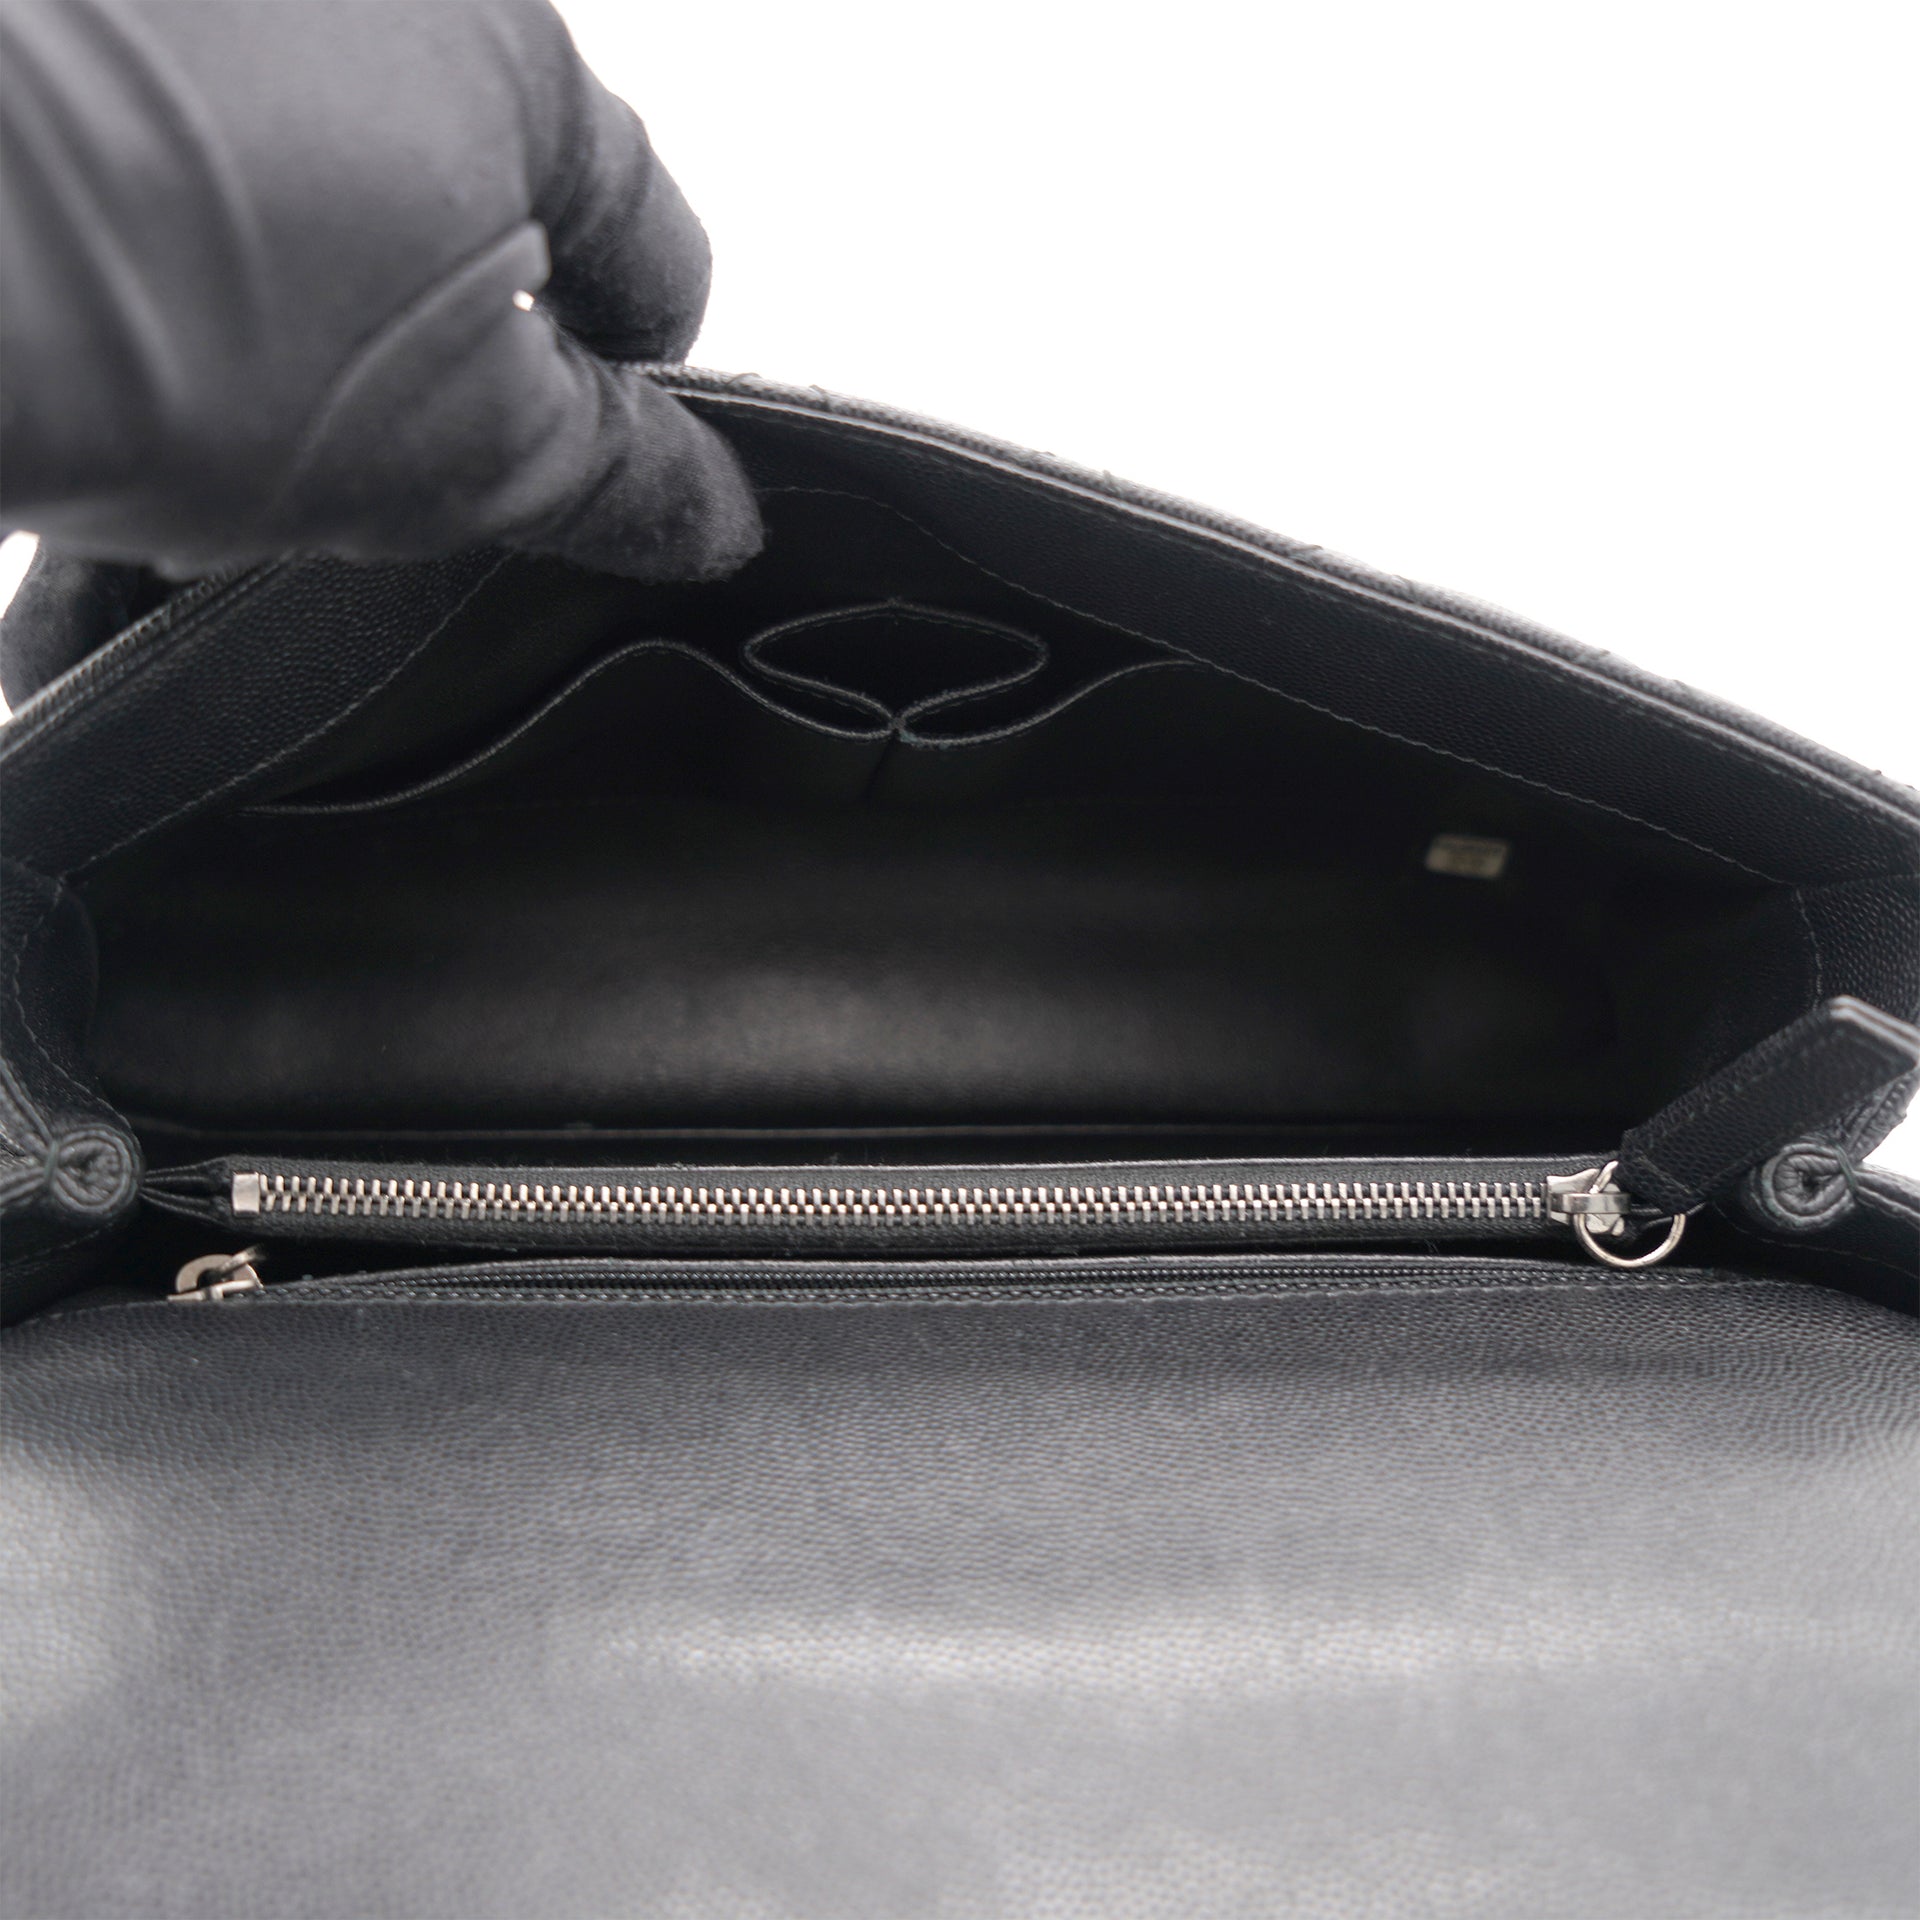 Black Caviar Leather Medium Coco Top Handle Bag